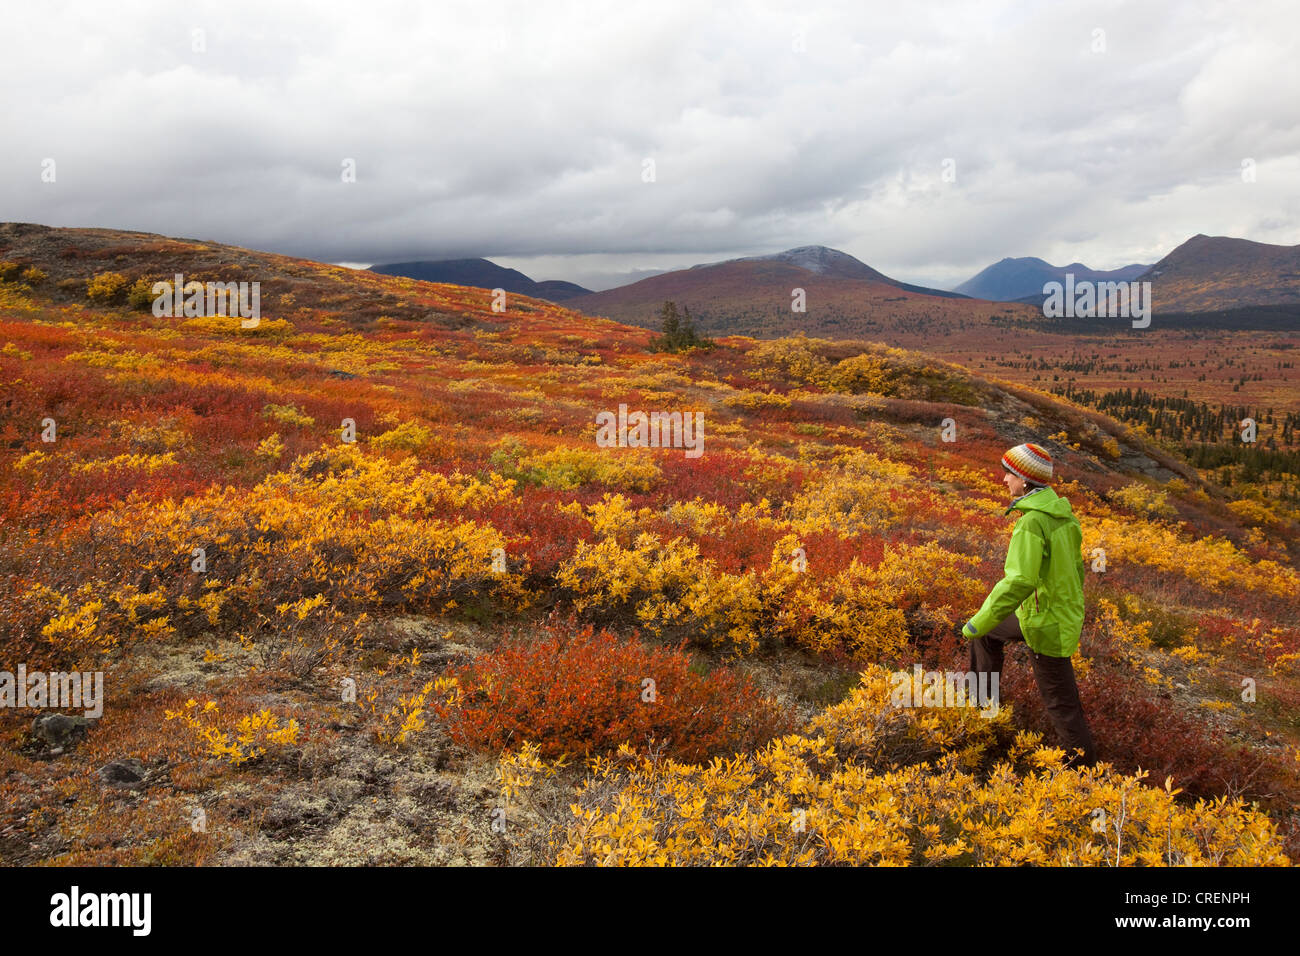 Junge Frau Wandern in subalpinen Tundra, Indian Summer, Blätter in Herbstfarben, Herbst, in der Nähe von Fish Lake, Yukon Territorium, Kanada Stockfoto